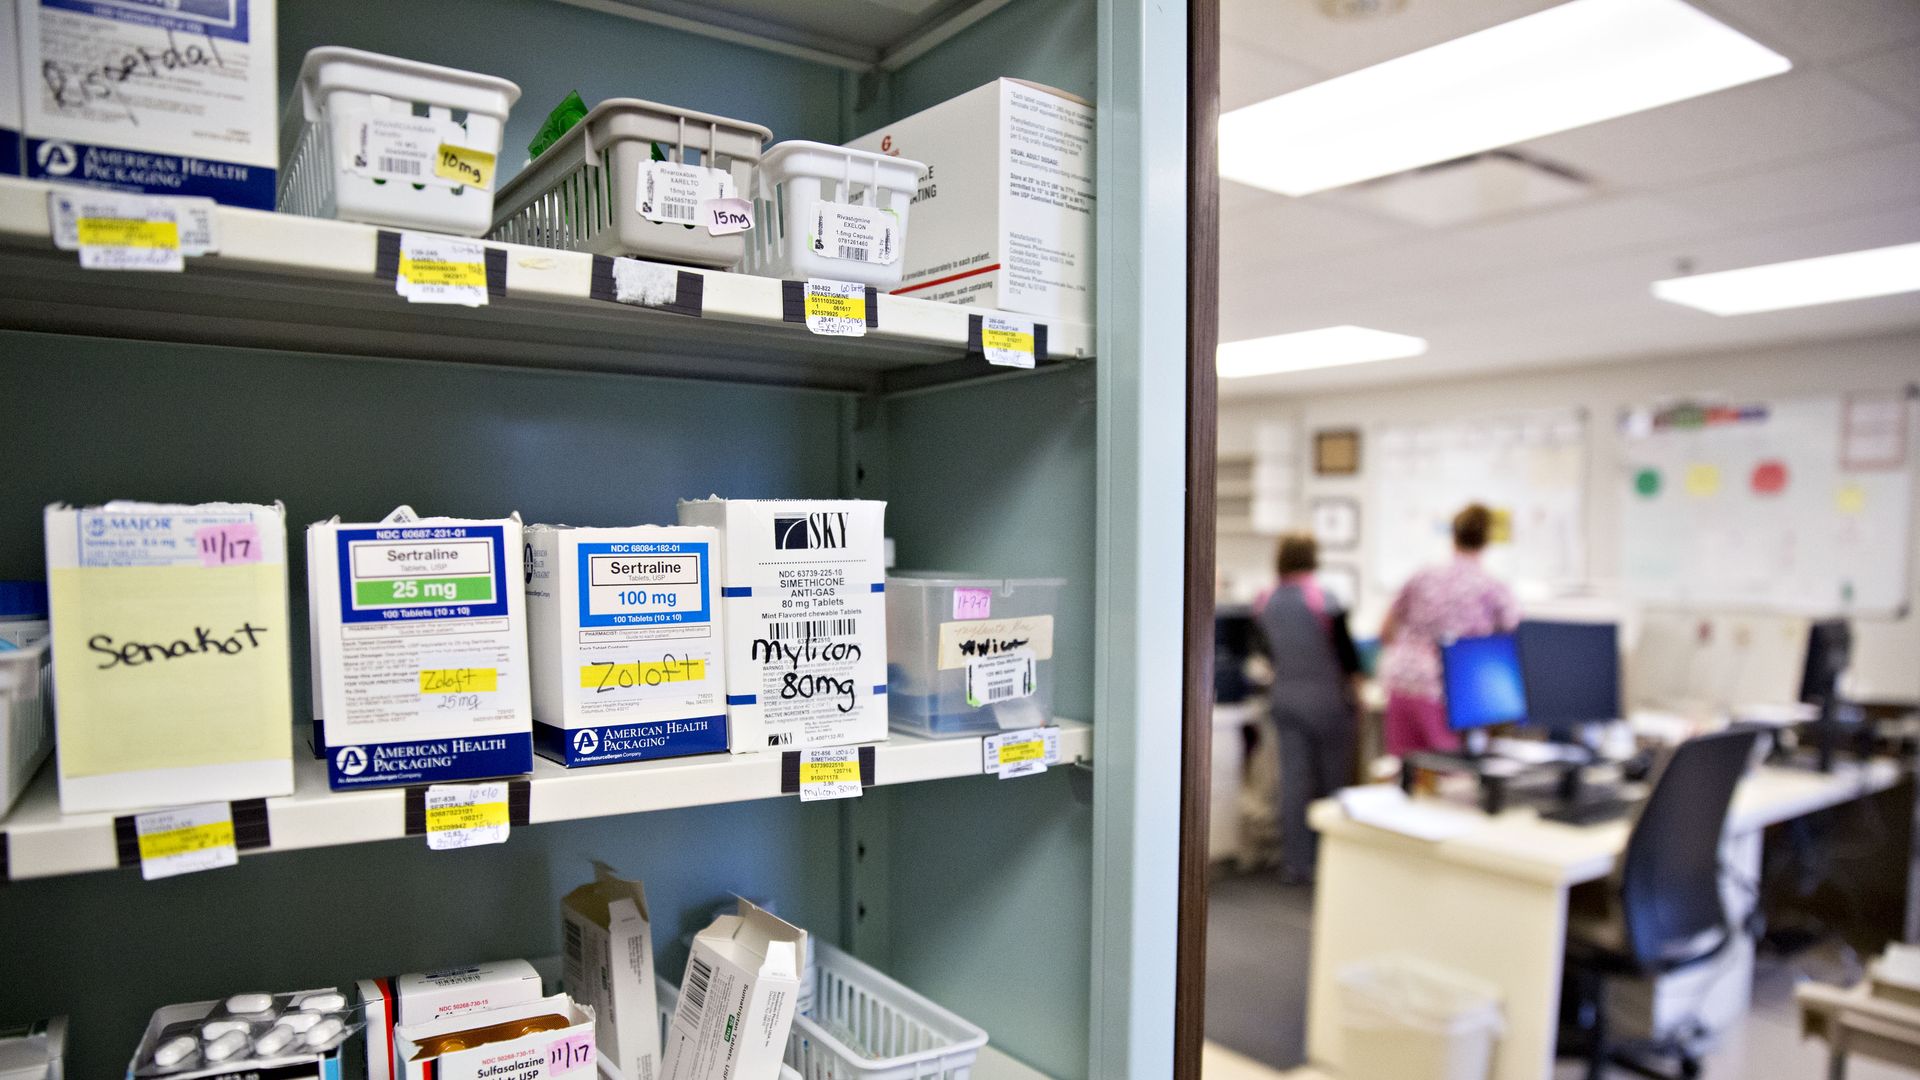 A shelf full of prescription medicines in a hospital.